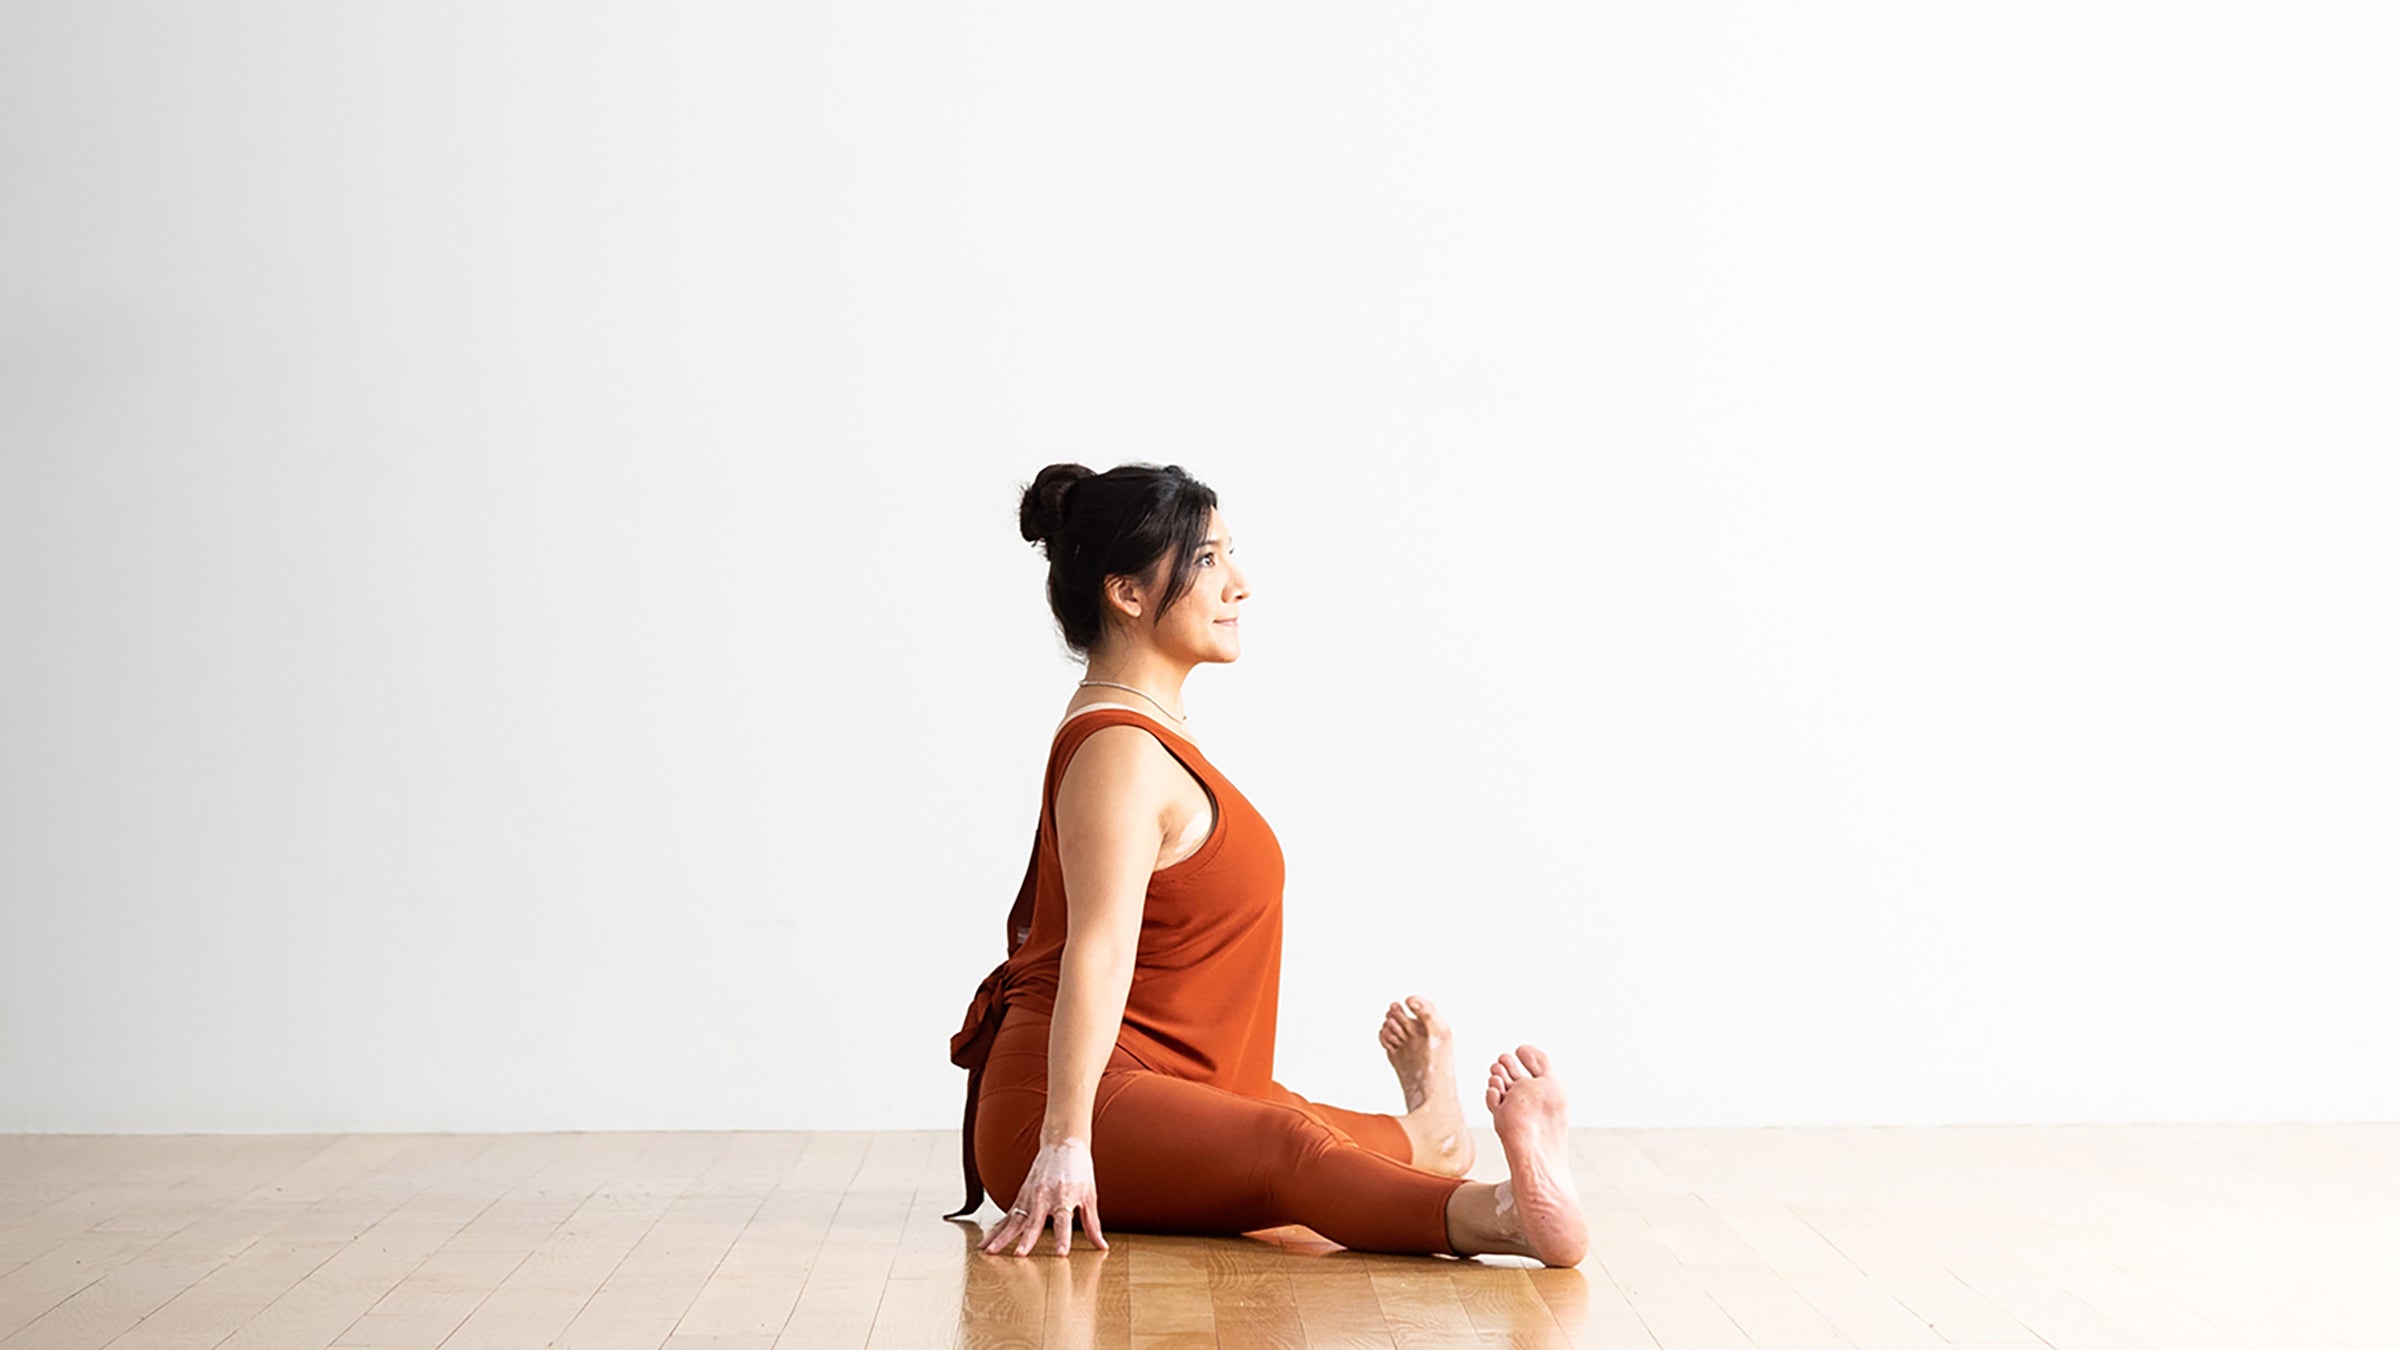 Yoga Intense Side Image & Photo (Free Trial) | Bigstock